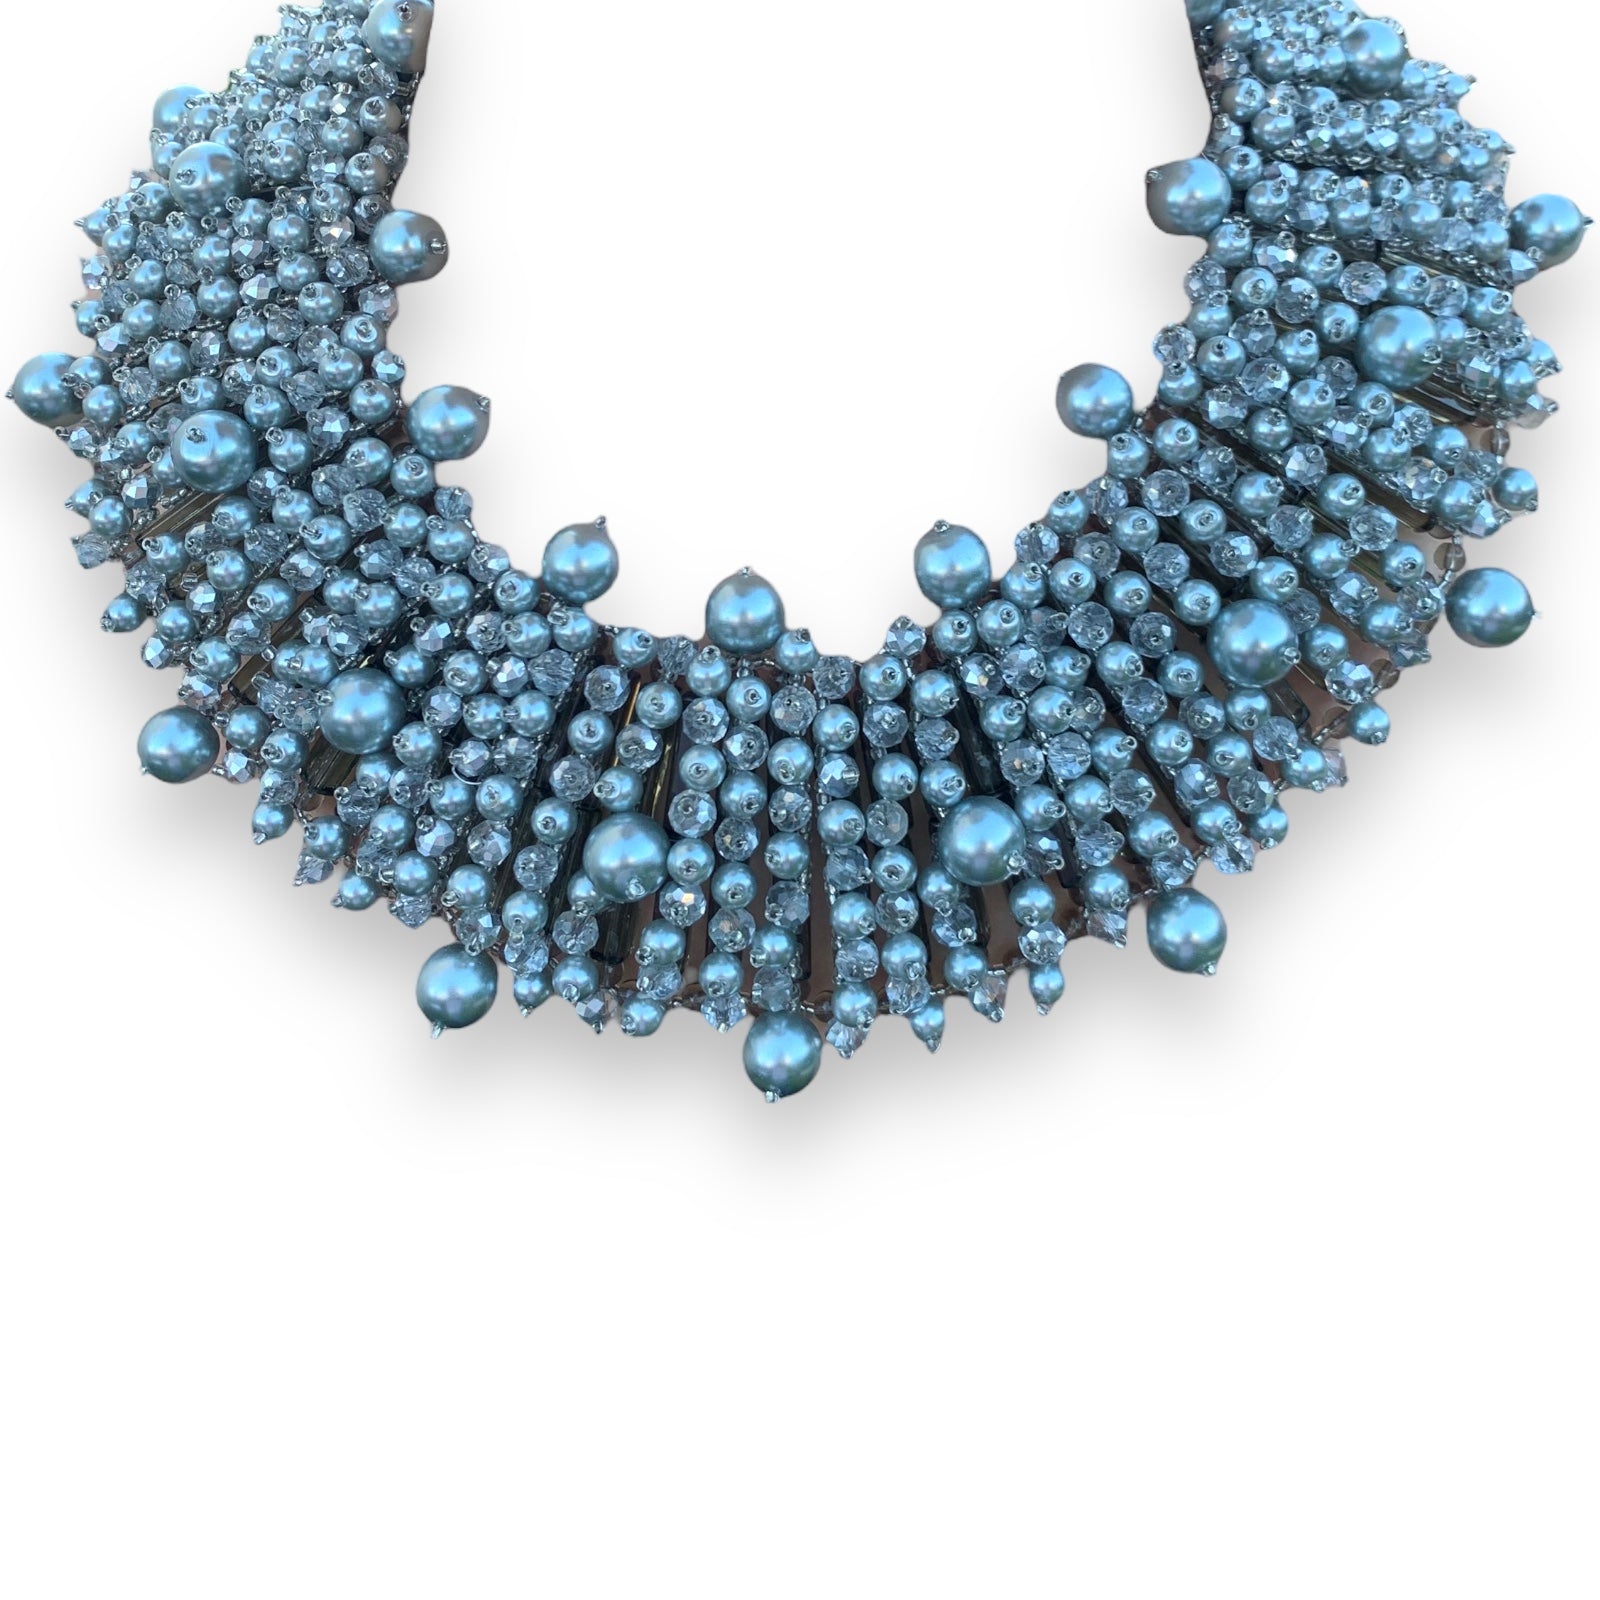 Handmade Necklace 20" Unique Freshwater Pearls & Beads Voguish Bib Choker Neckwear